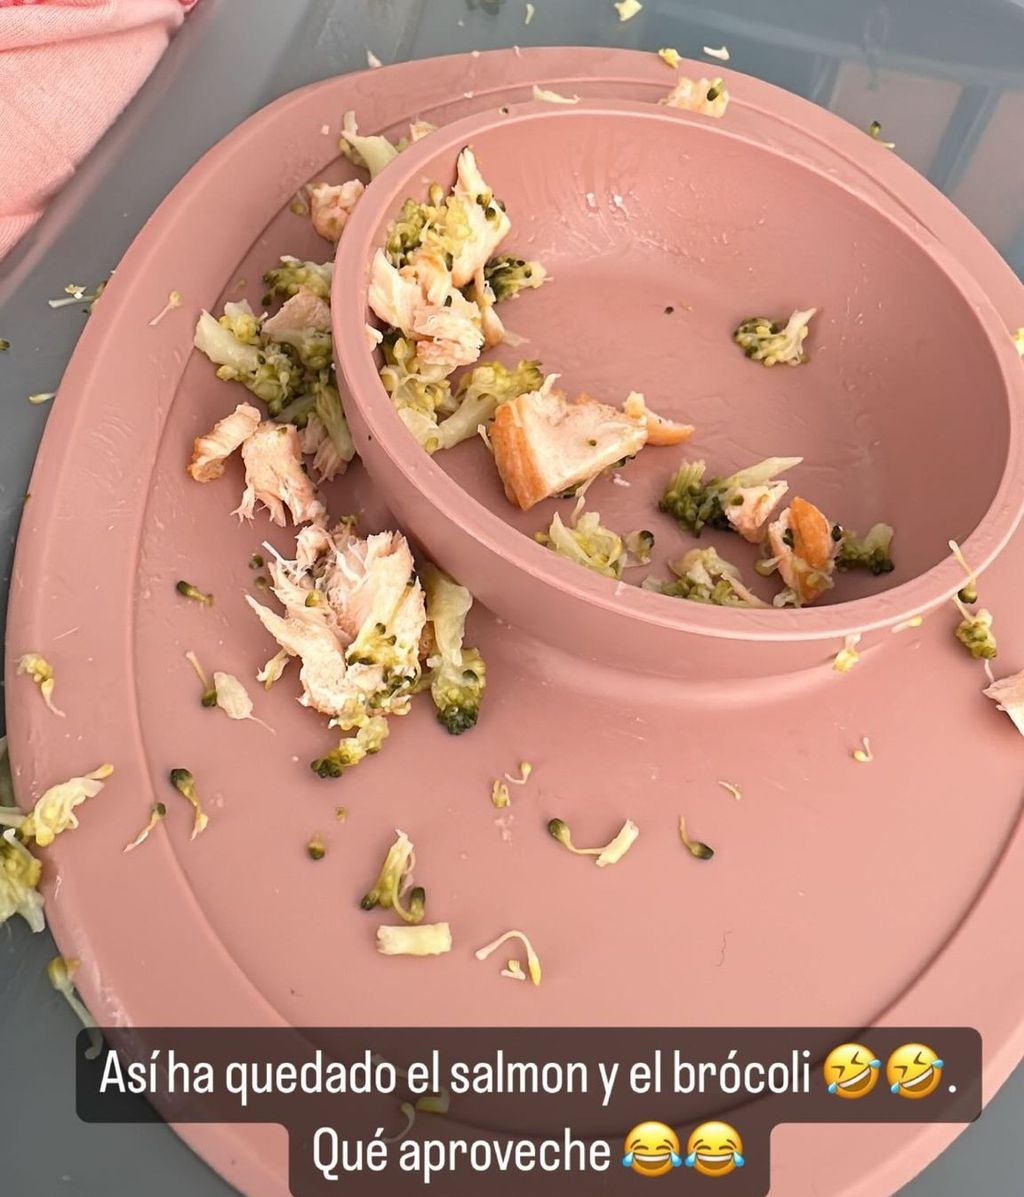 El plato de comida de Laia, la hija de Cristina Pedroche